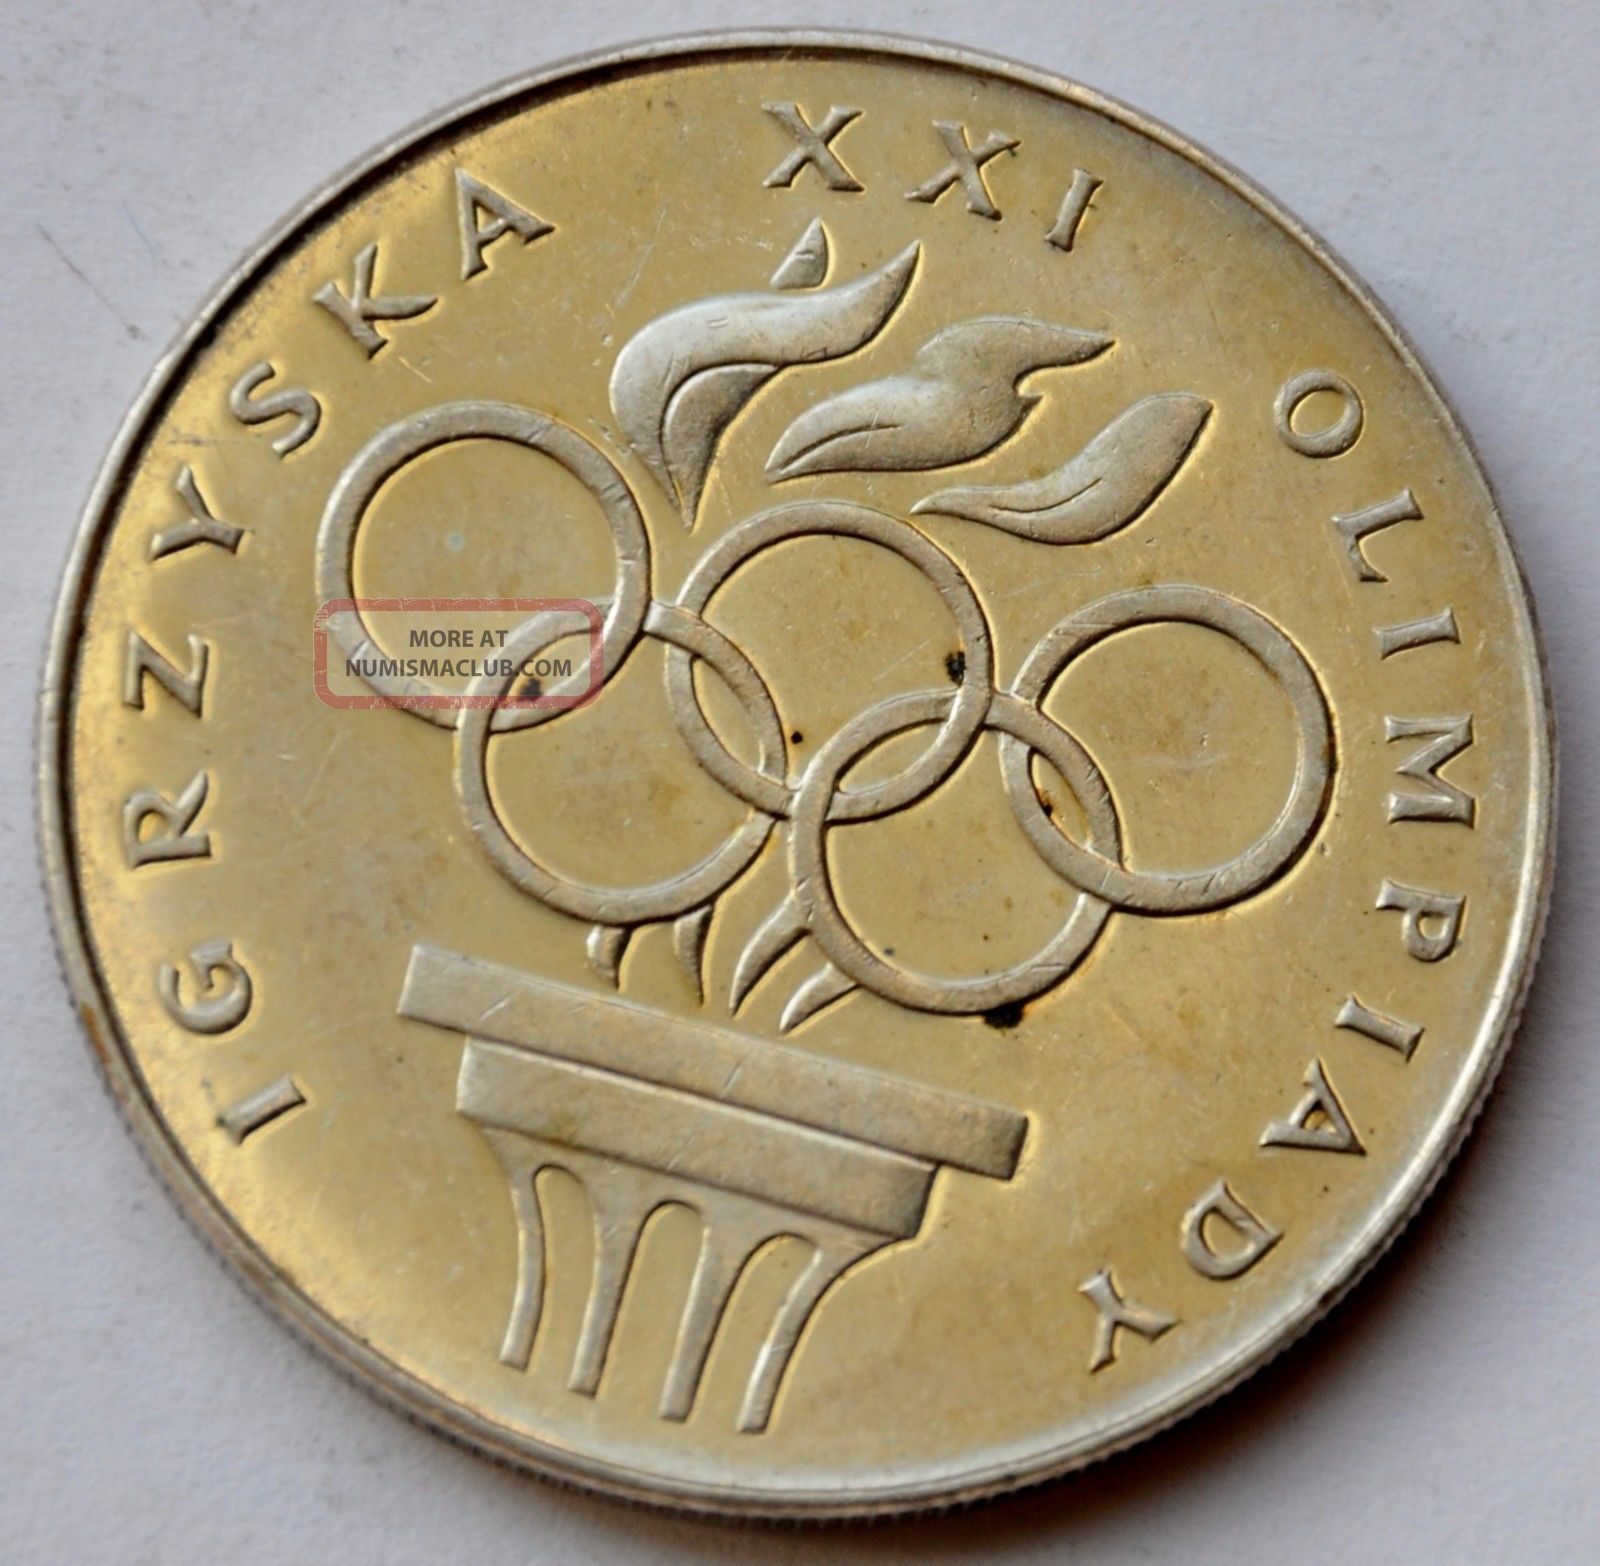 Poland 200 Zlotych, 1976, Xxi Olympics, Silver Coin